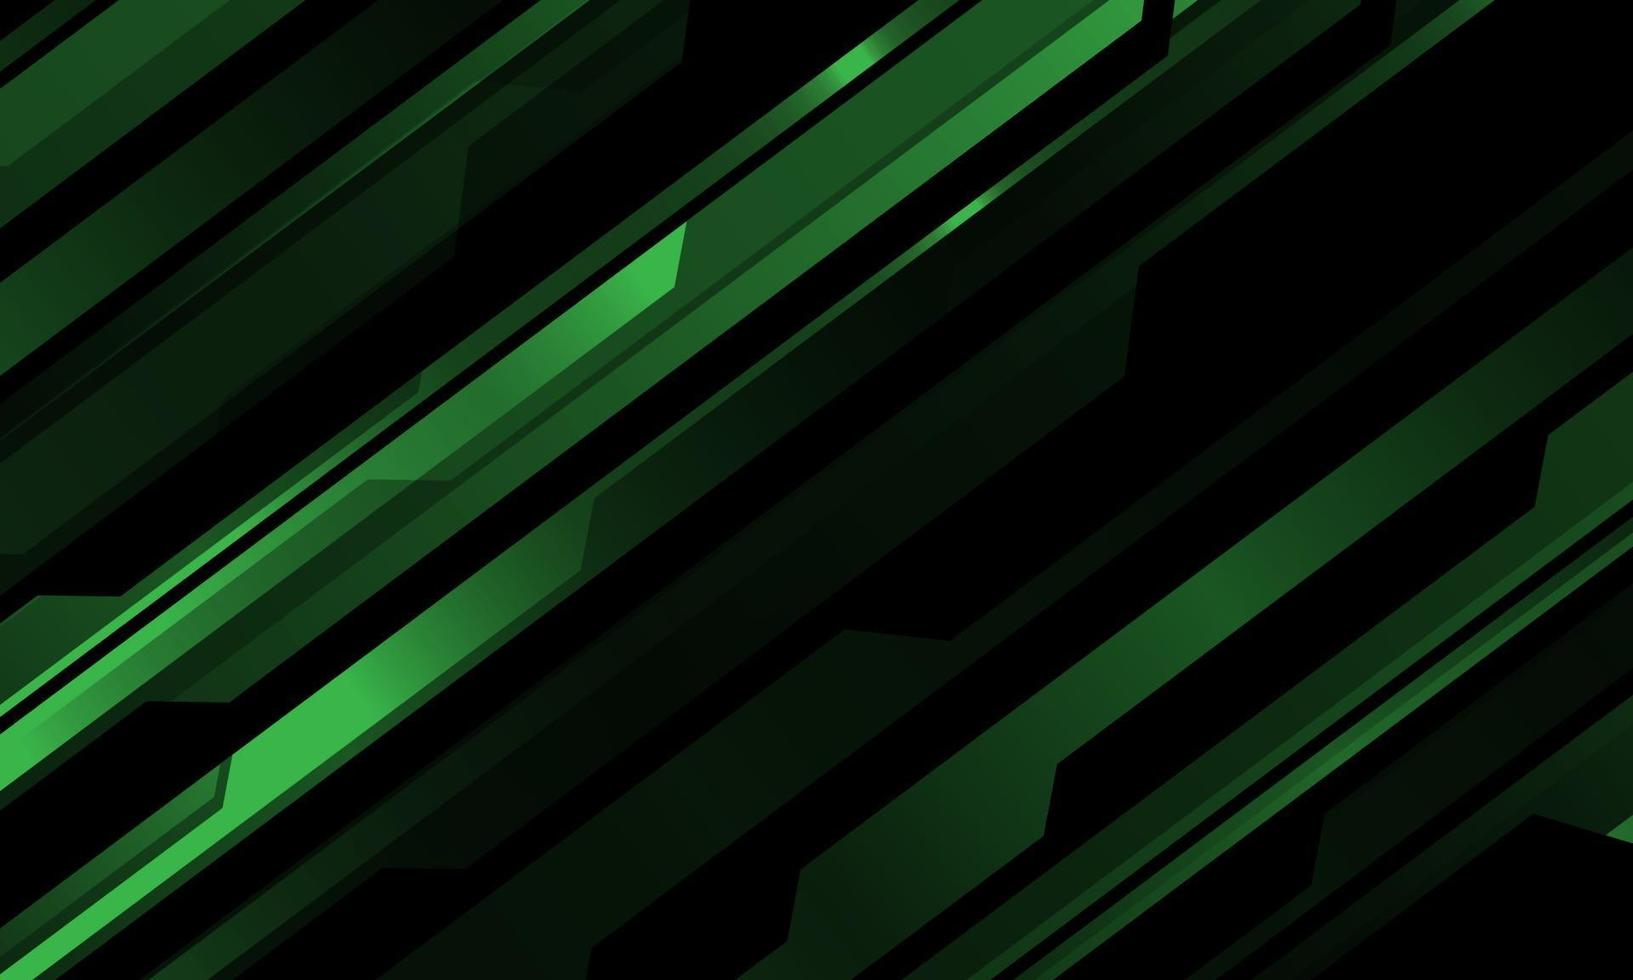 patrón cibernético metálico verde abstracto en diseño negro tecnología moderna fondo futurista ilustración vectorial. vector